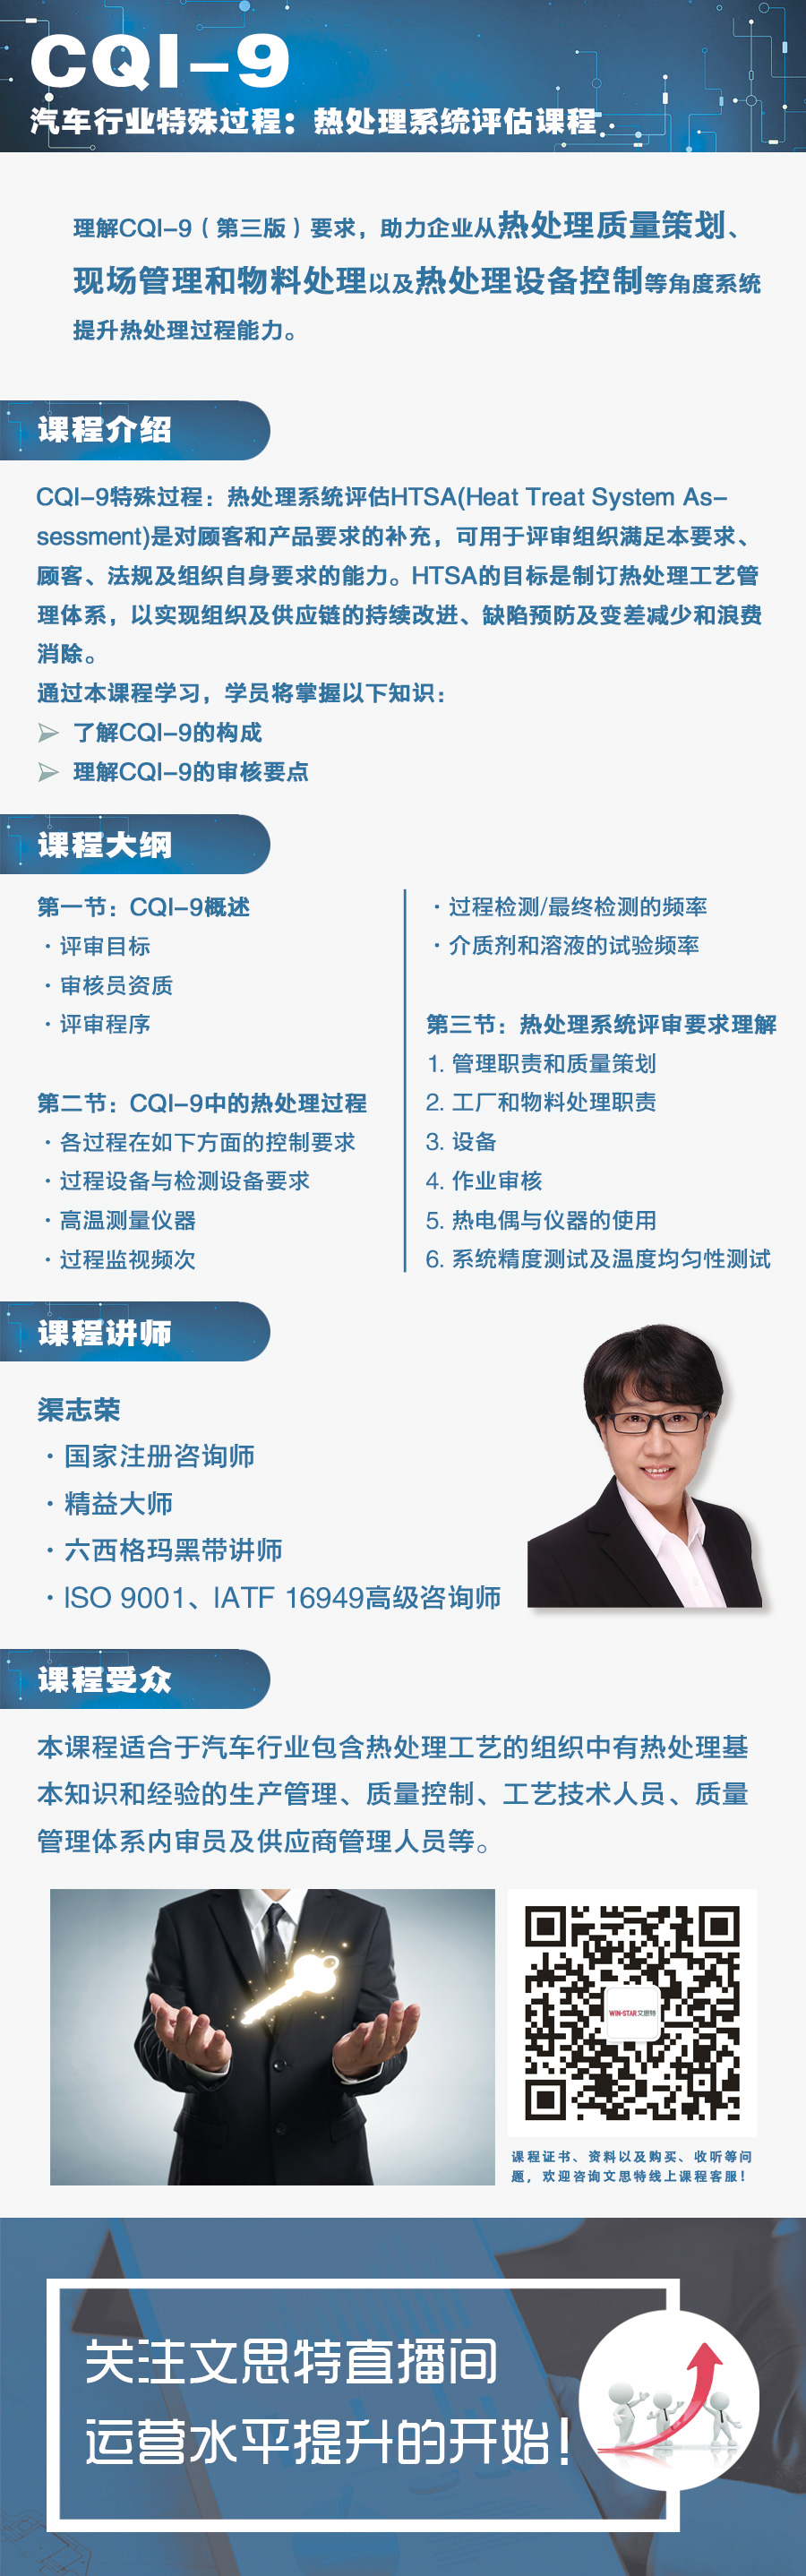 CQI-9大纲（小鹅通）.jpg